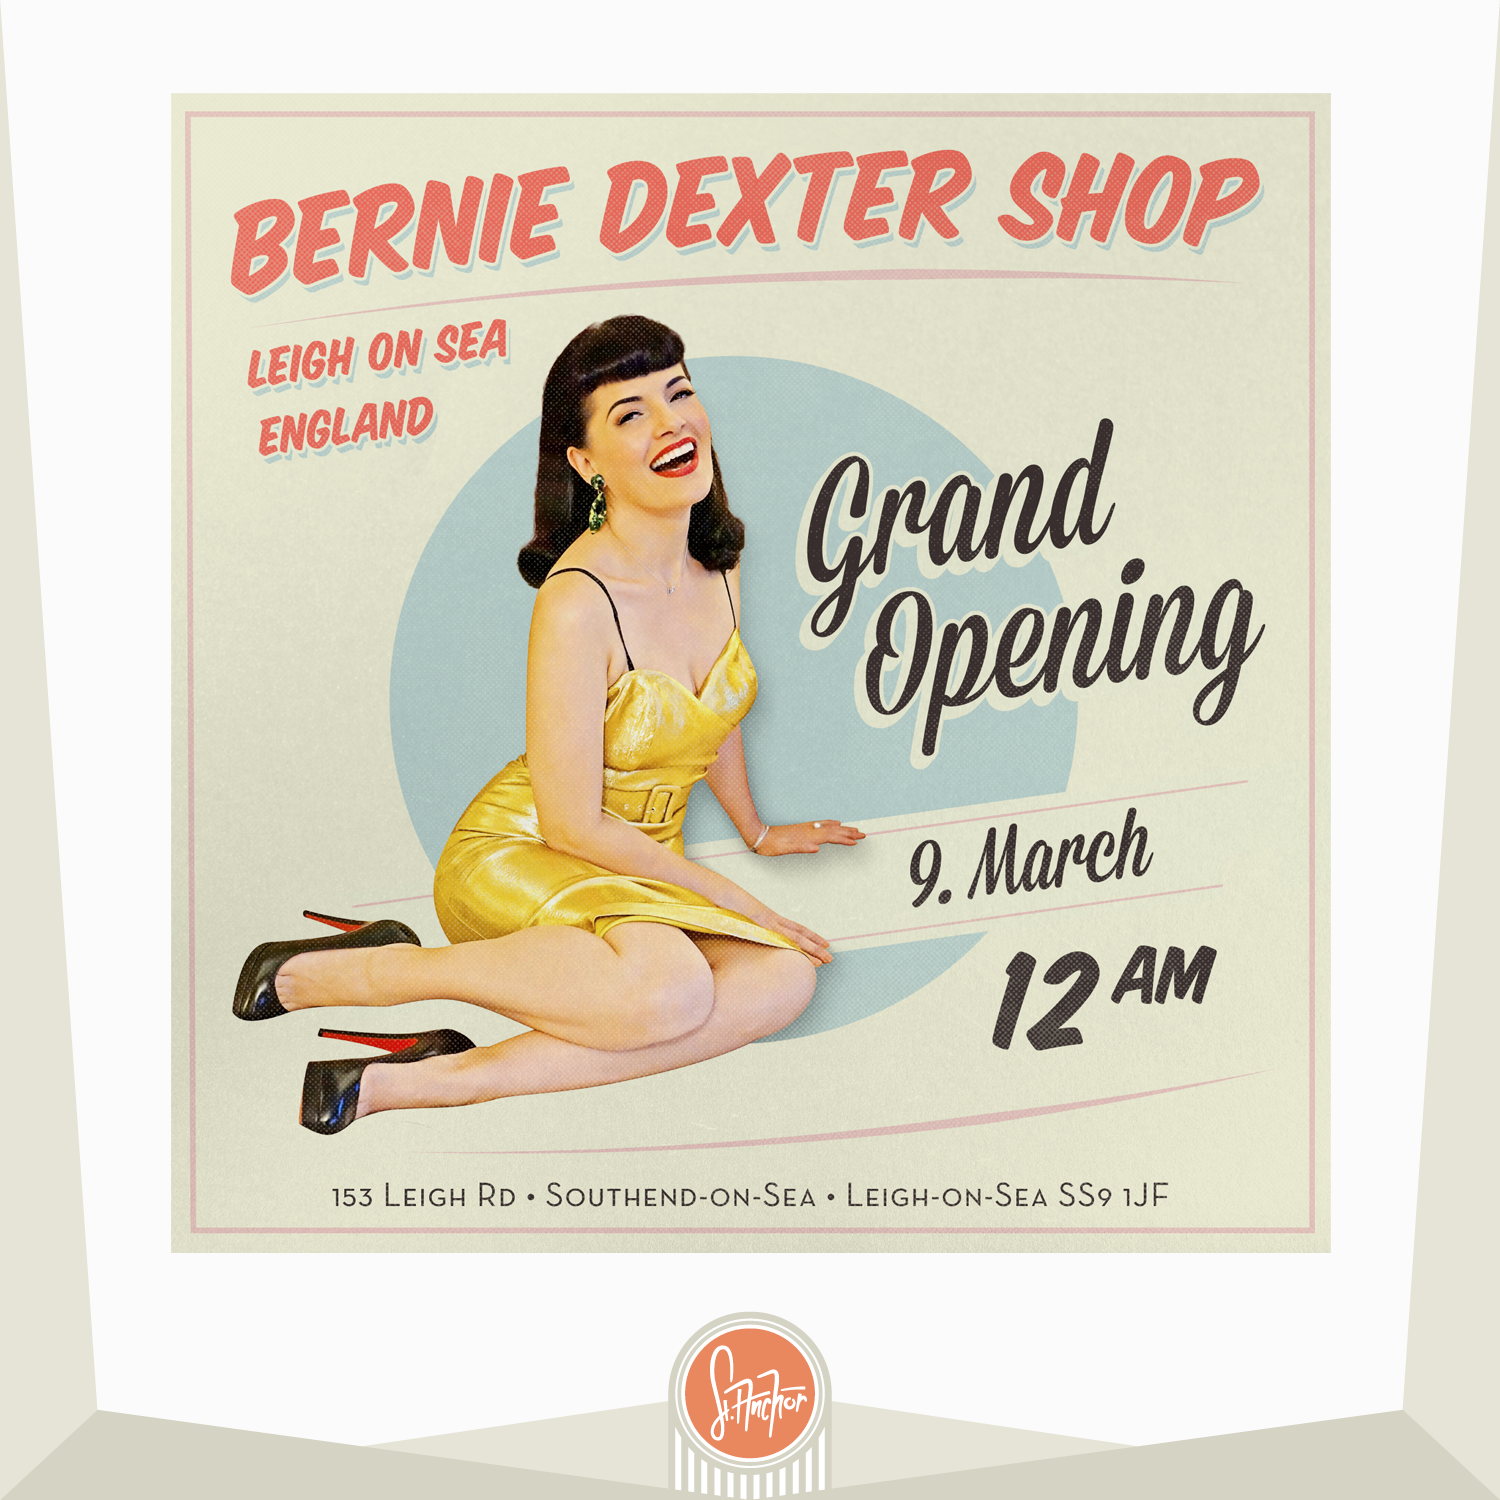 Bernie Dexter Shop Opening - Flyer Design - Model: Bernie Dexter Photo: Levi Dexter